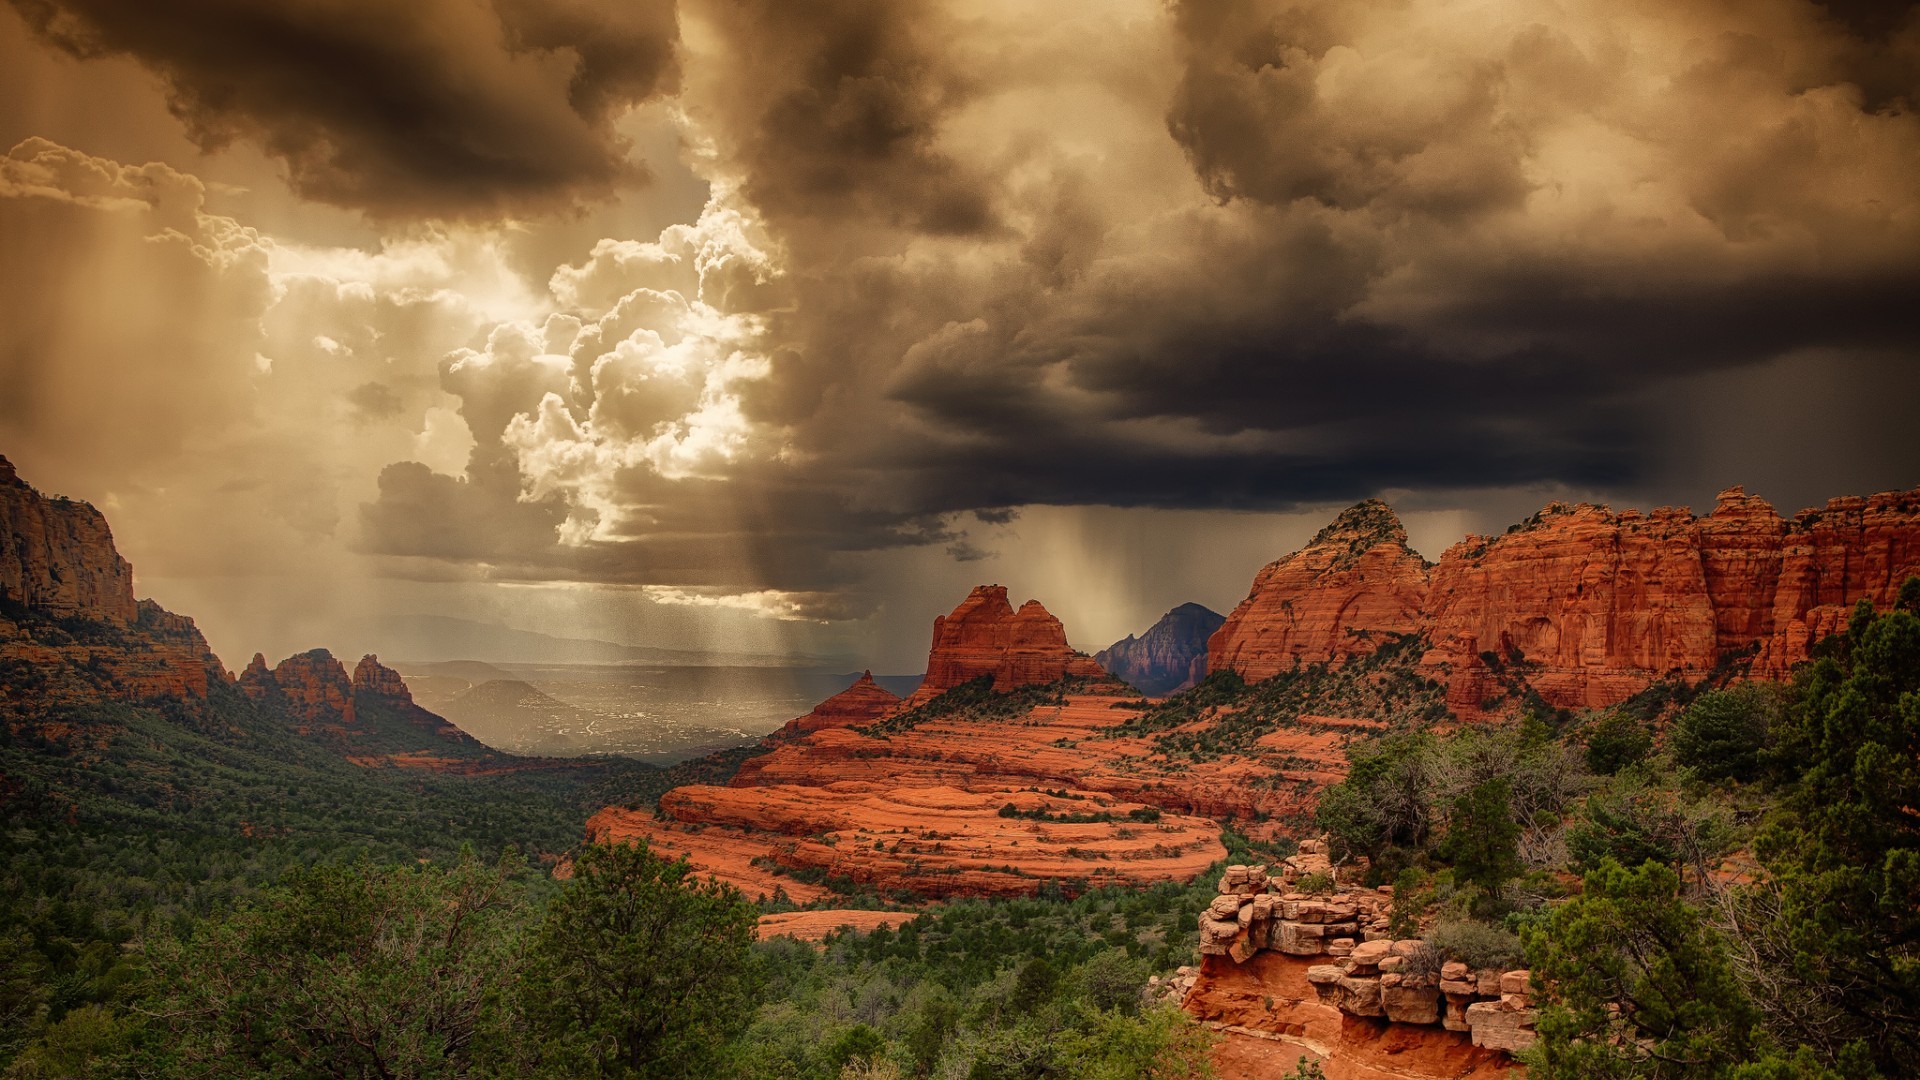 Desktop wallpapers Storm clouds over the red rocks of Sedona, Arizona